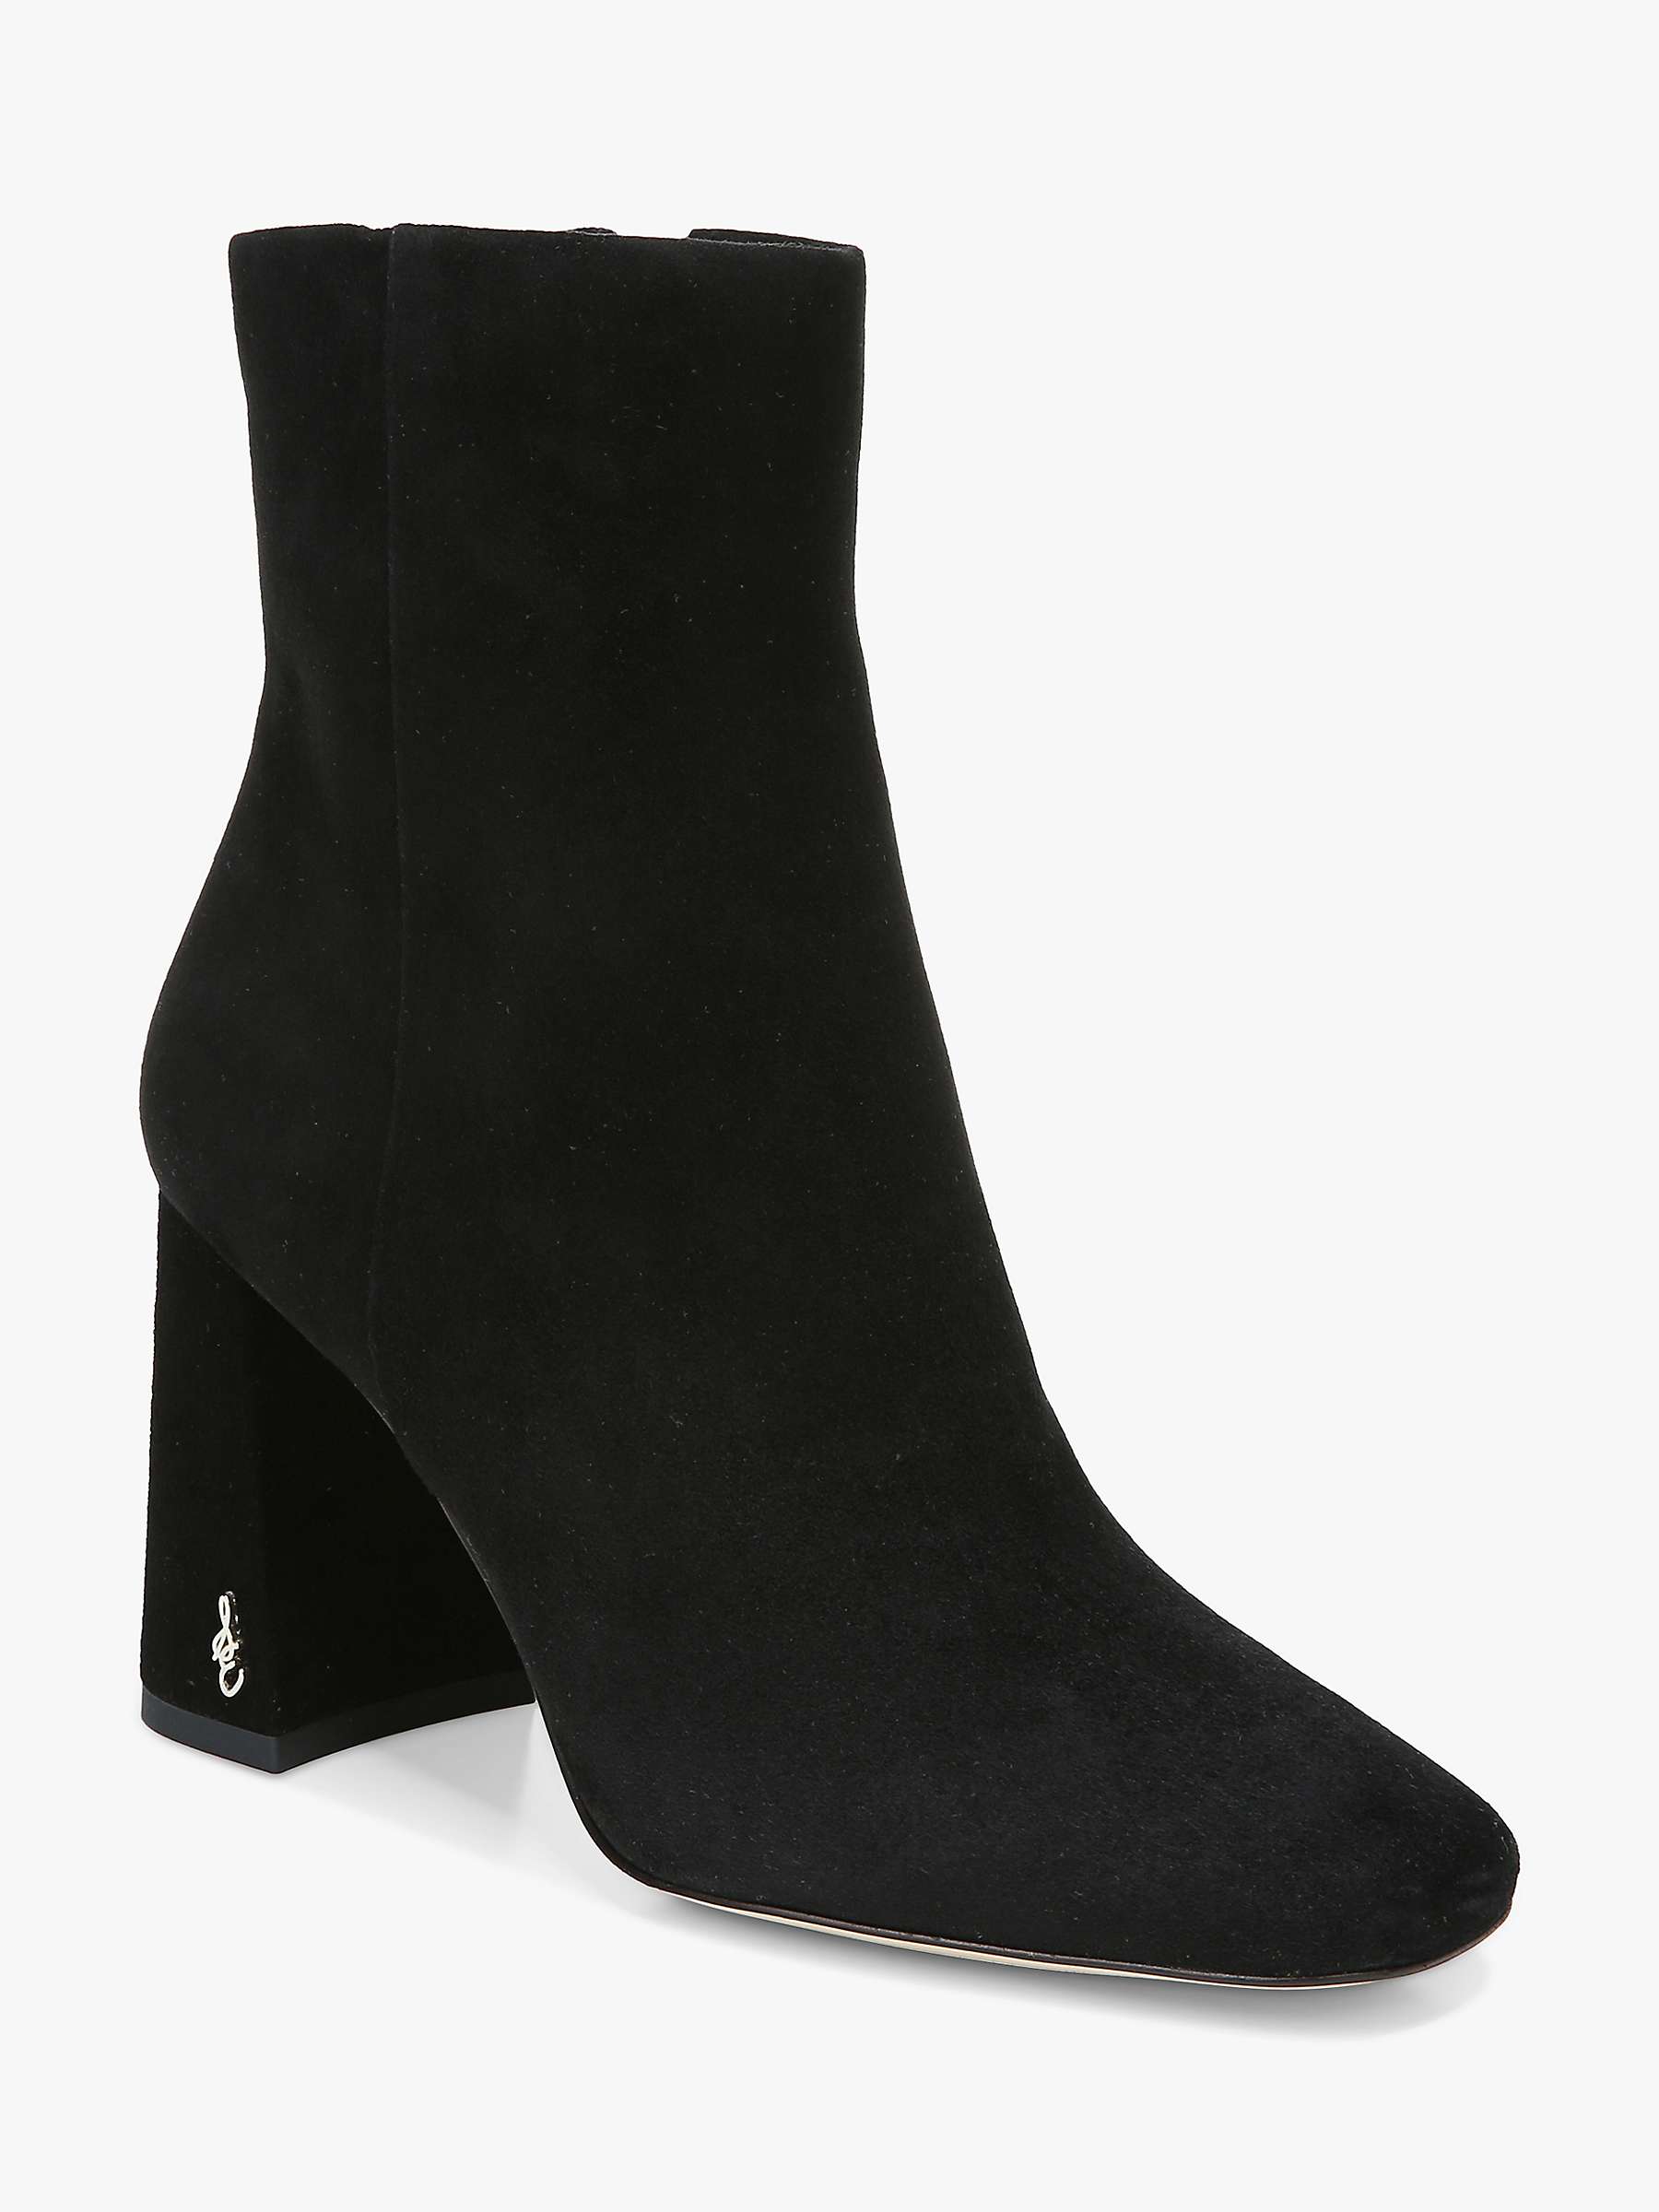 Buy Sam Edelman Codie Block Heel Suede Ankle Boots Online at johnlewis.com